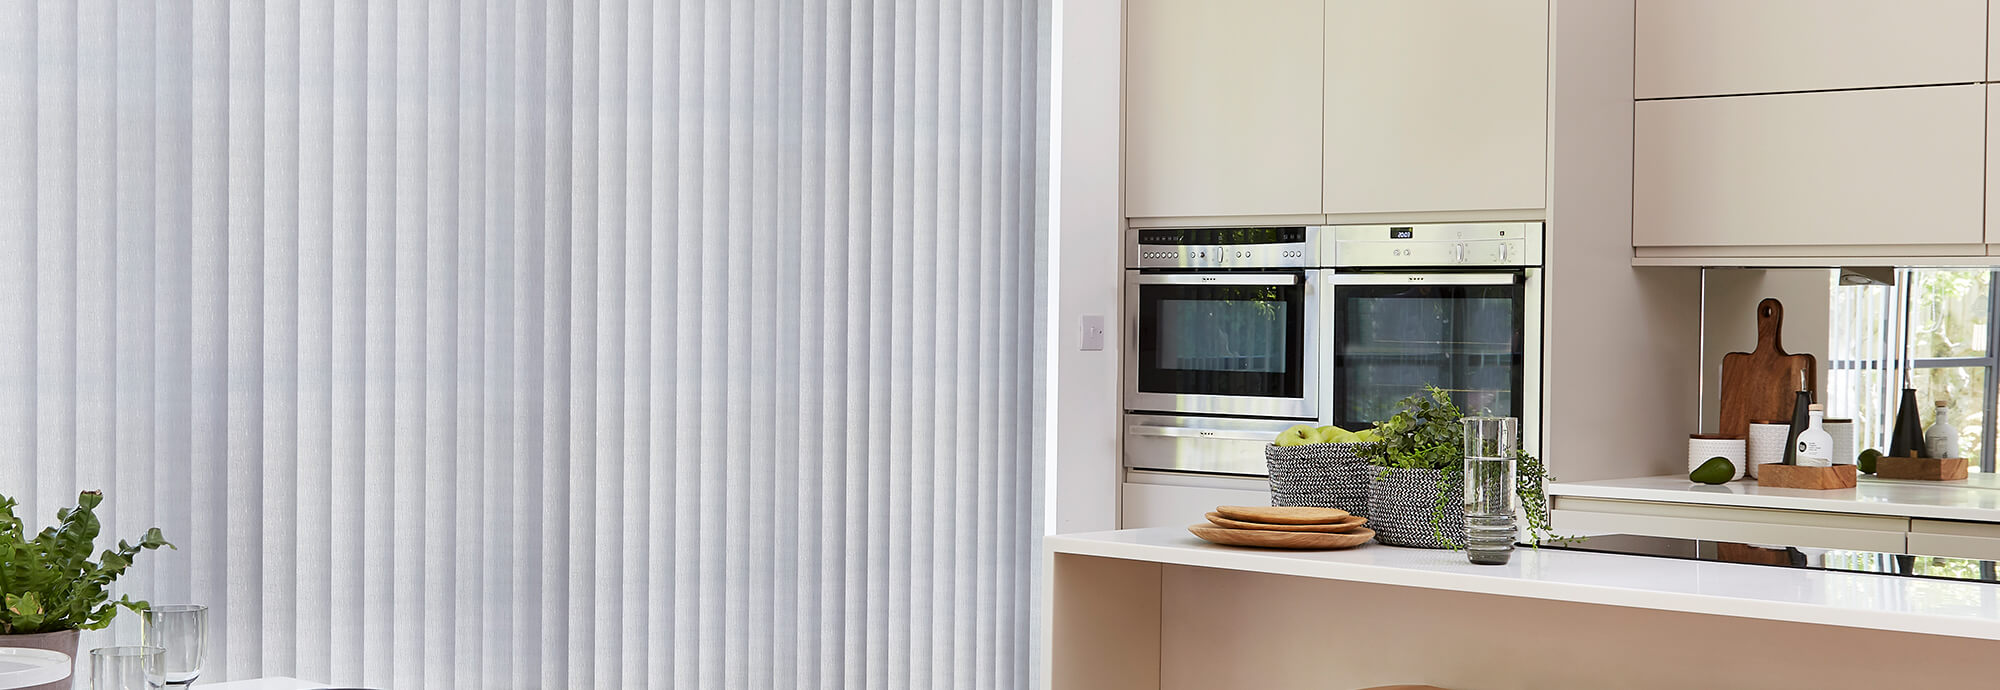 vertical kitchen blinds